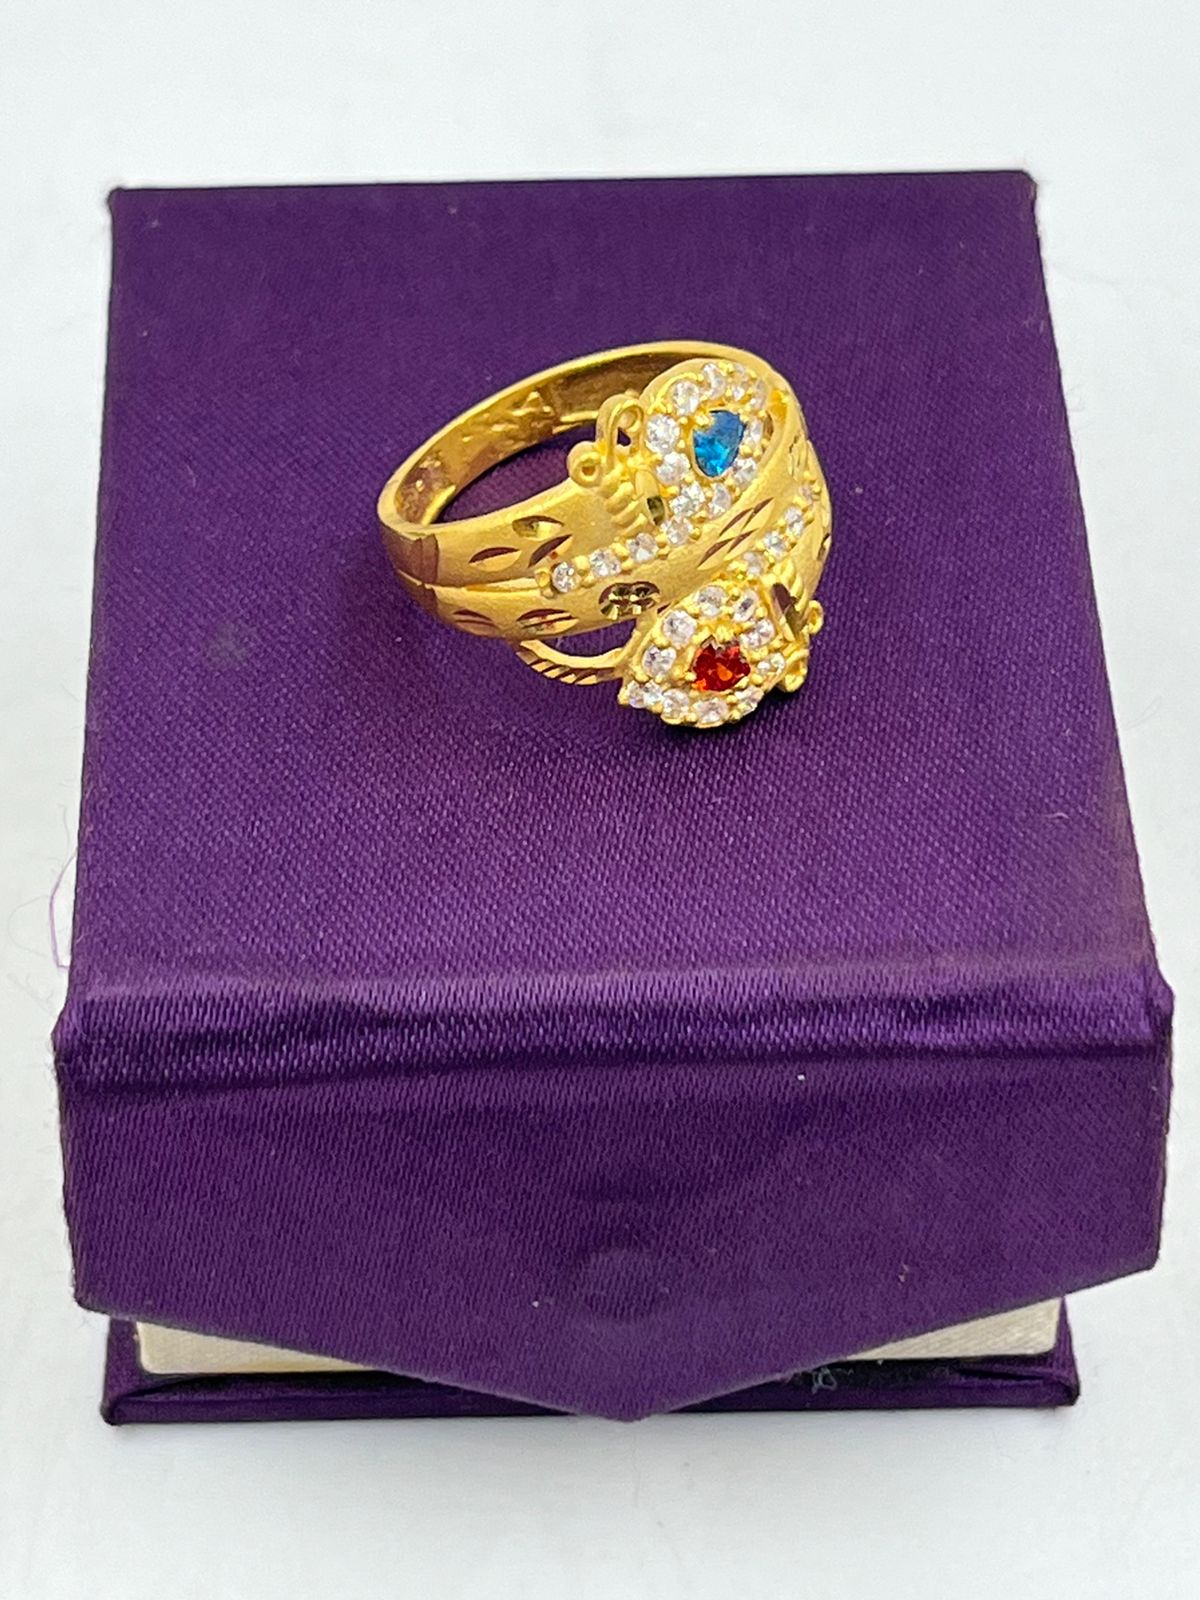 Gold ring designs for women /gold ring design 💍 - YouTube